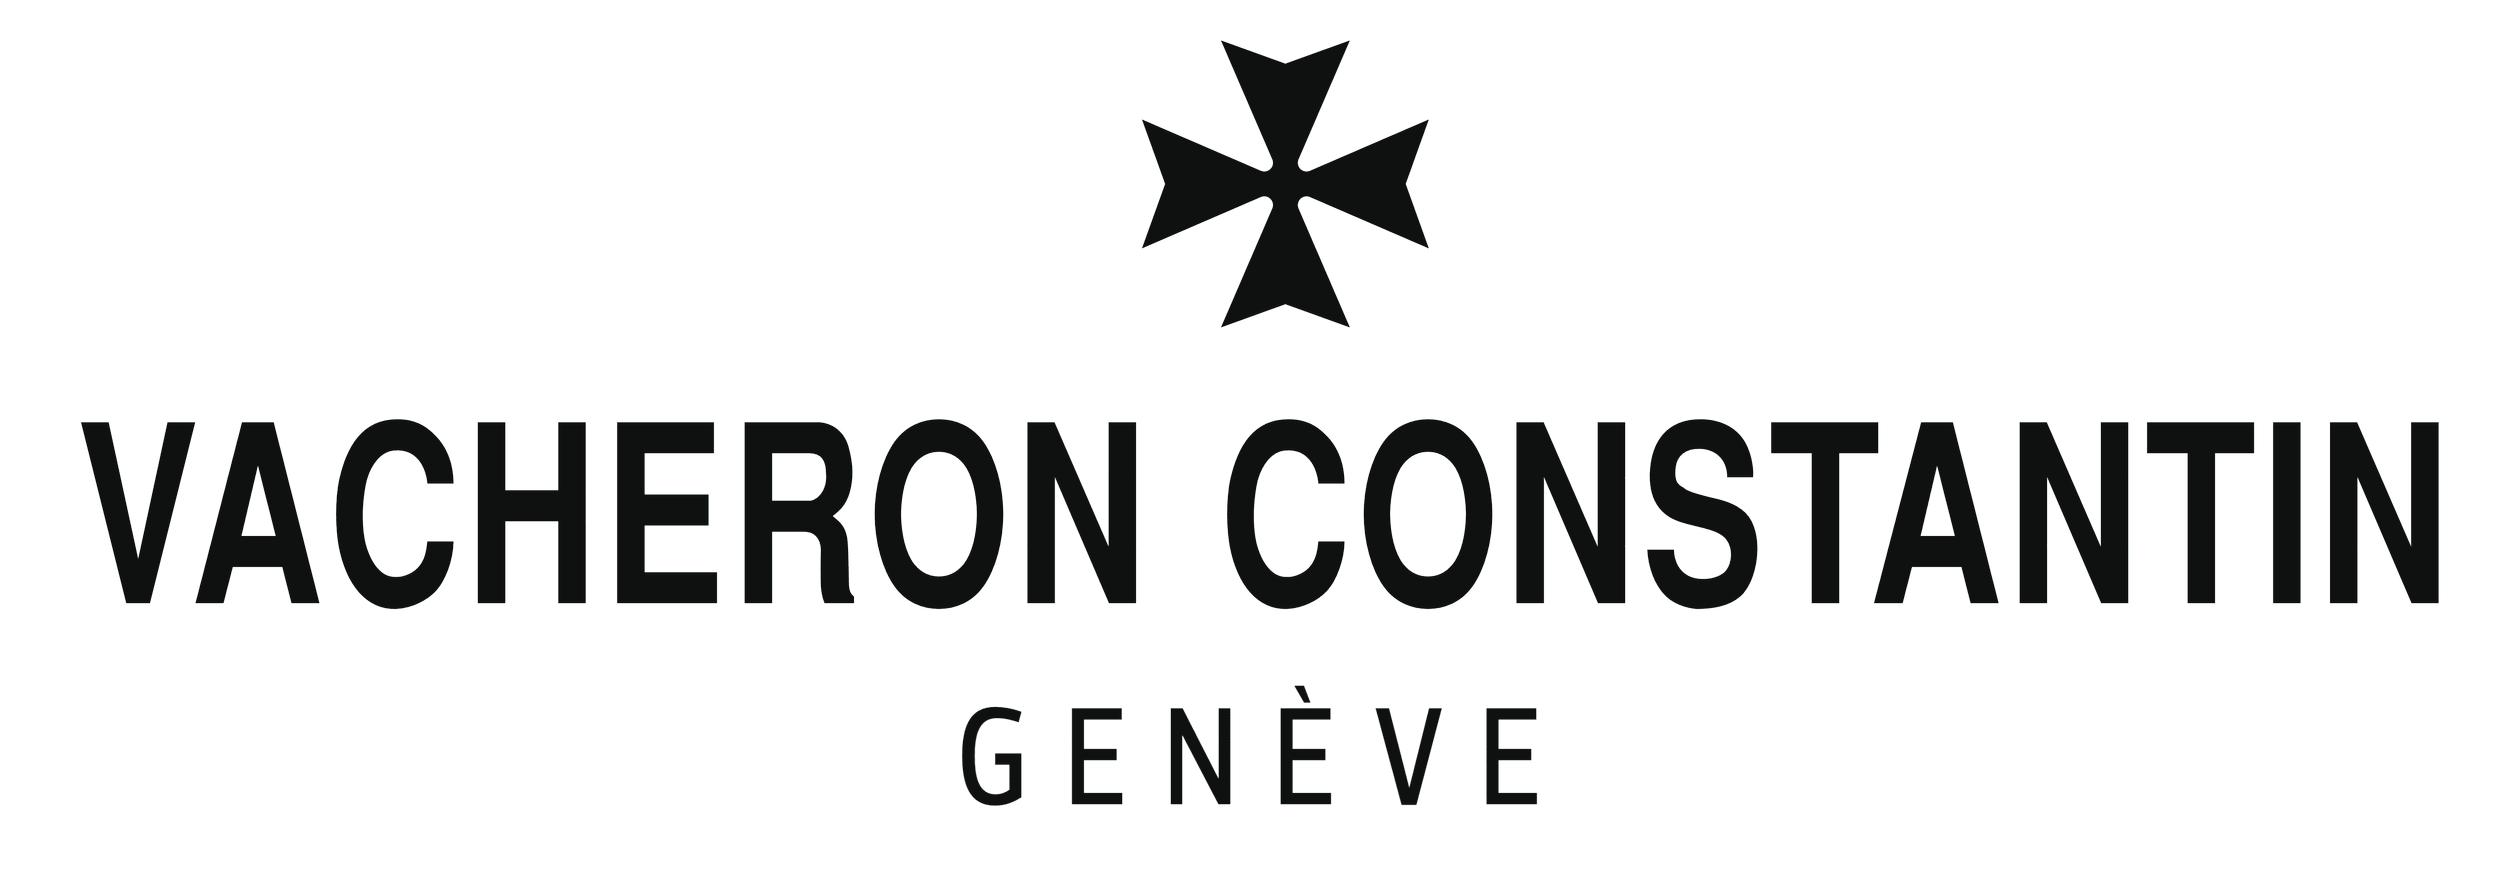 exceptional service - Vacheron Constantin logo PNG3